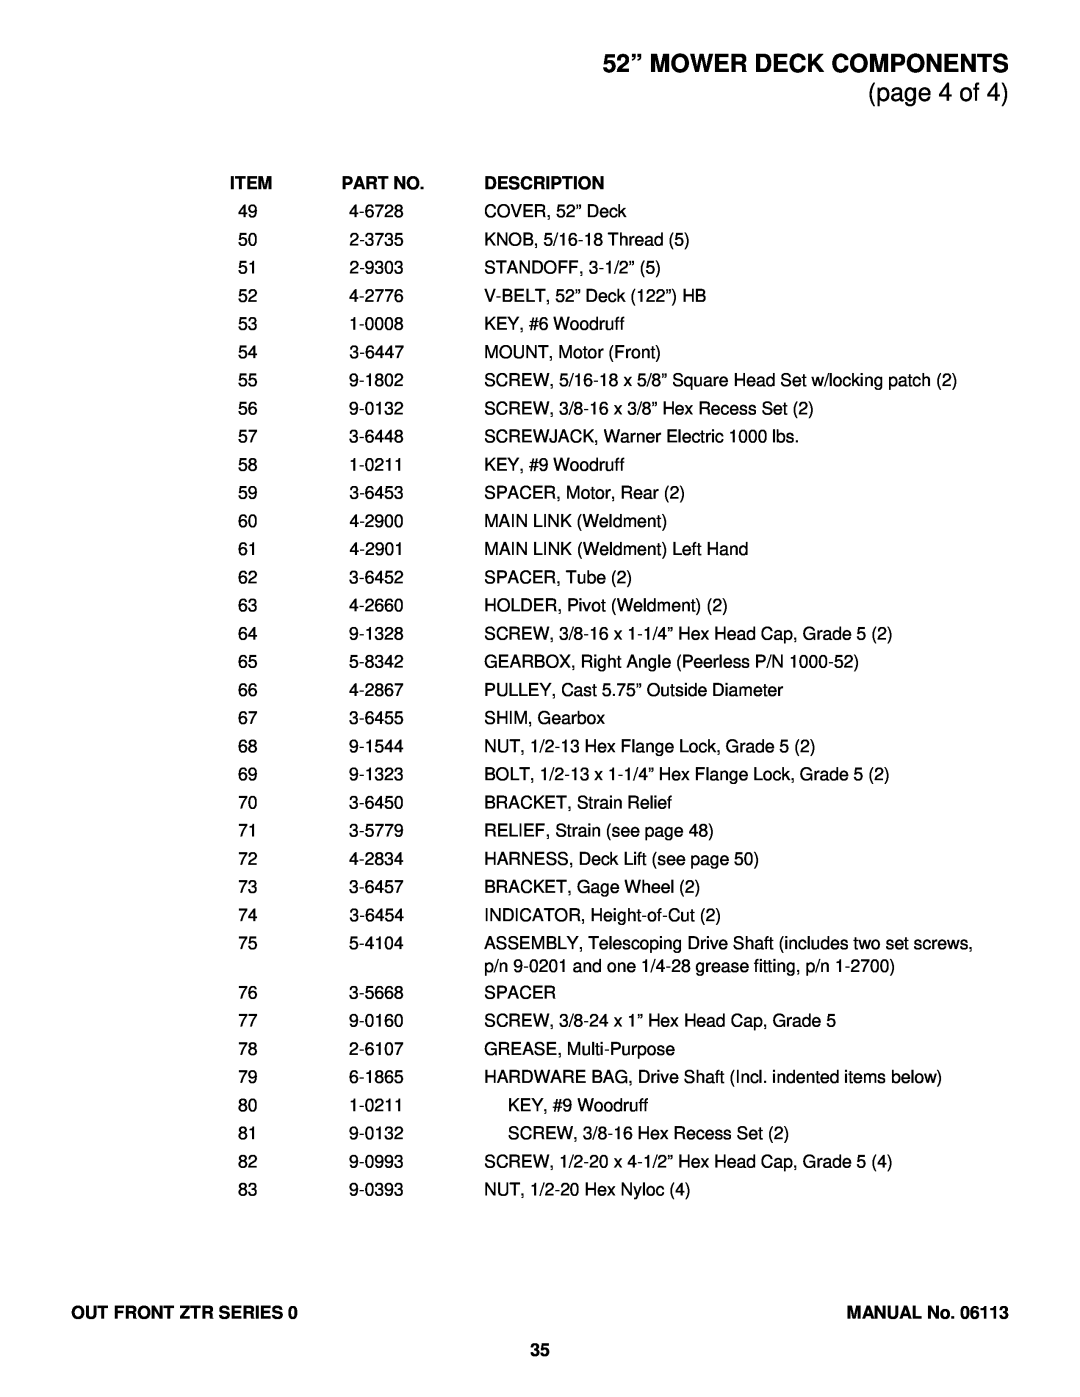 Snapper EZF6100M, EZF5200M, EZF2100DKU, ZF2300GKU manual page 4 of, 52” MOWER DECK COMPONENTS 